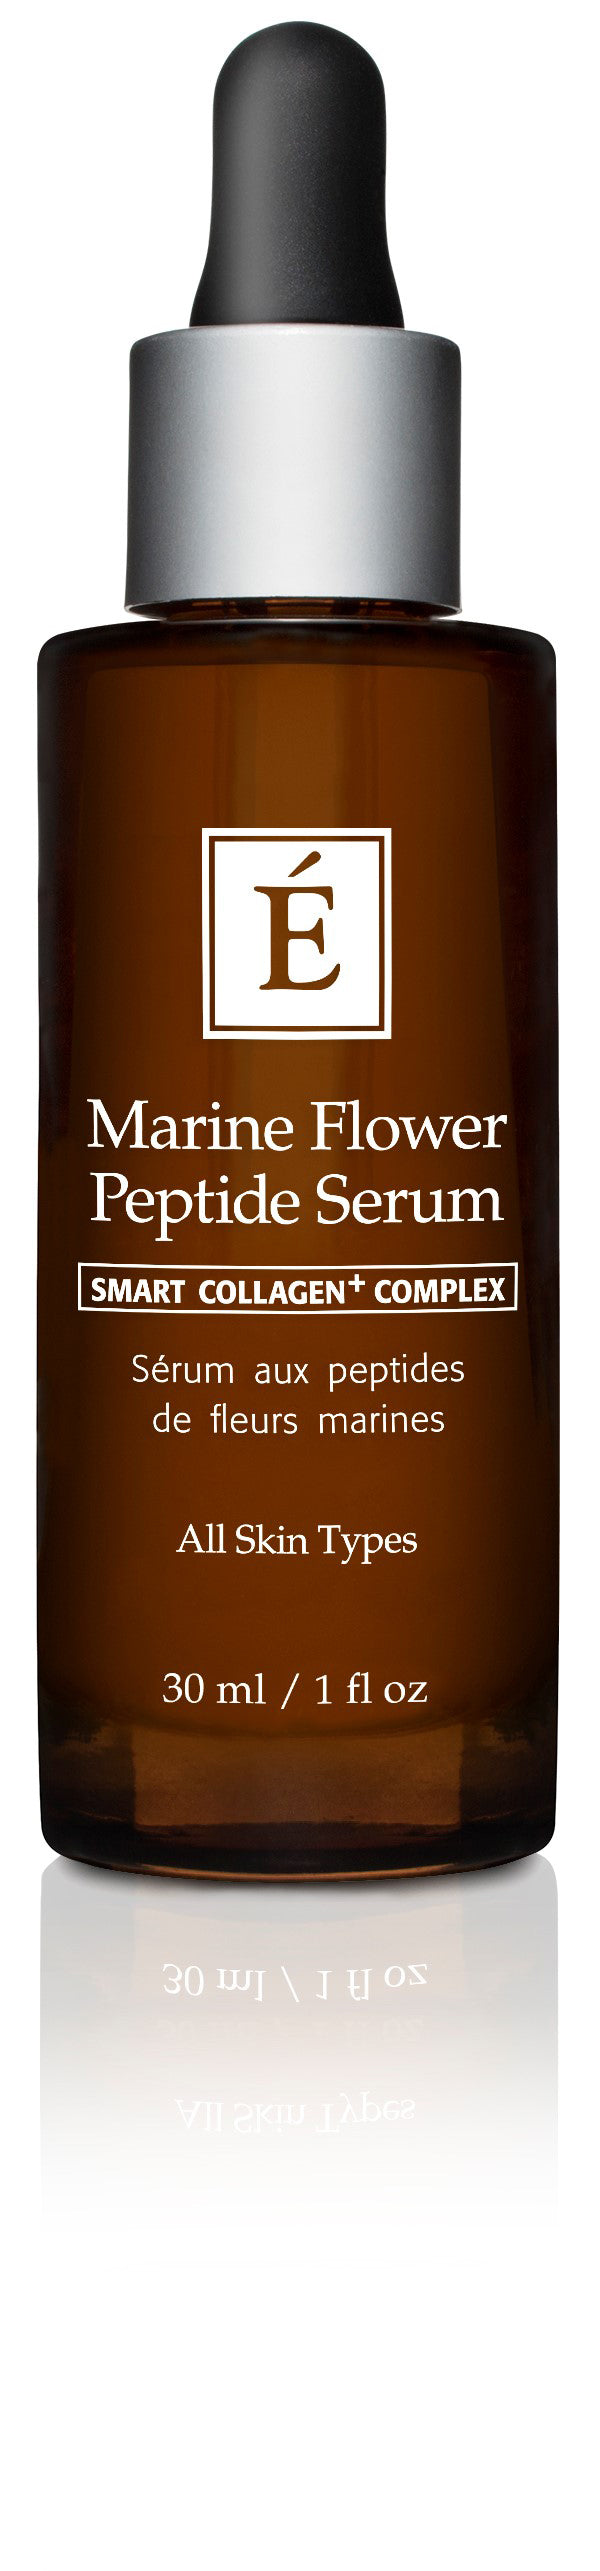 Marine Flower Peptide Serum